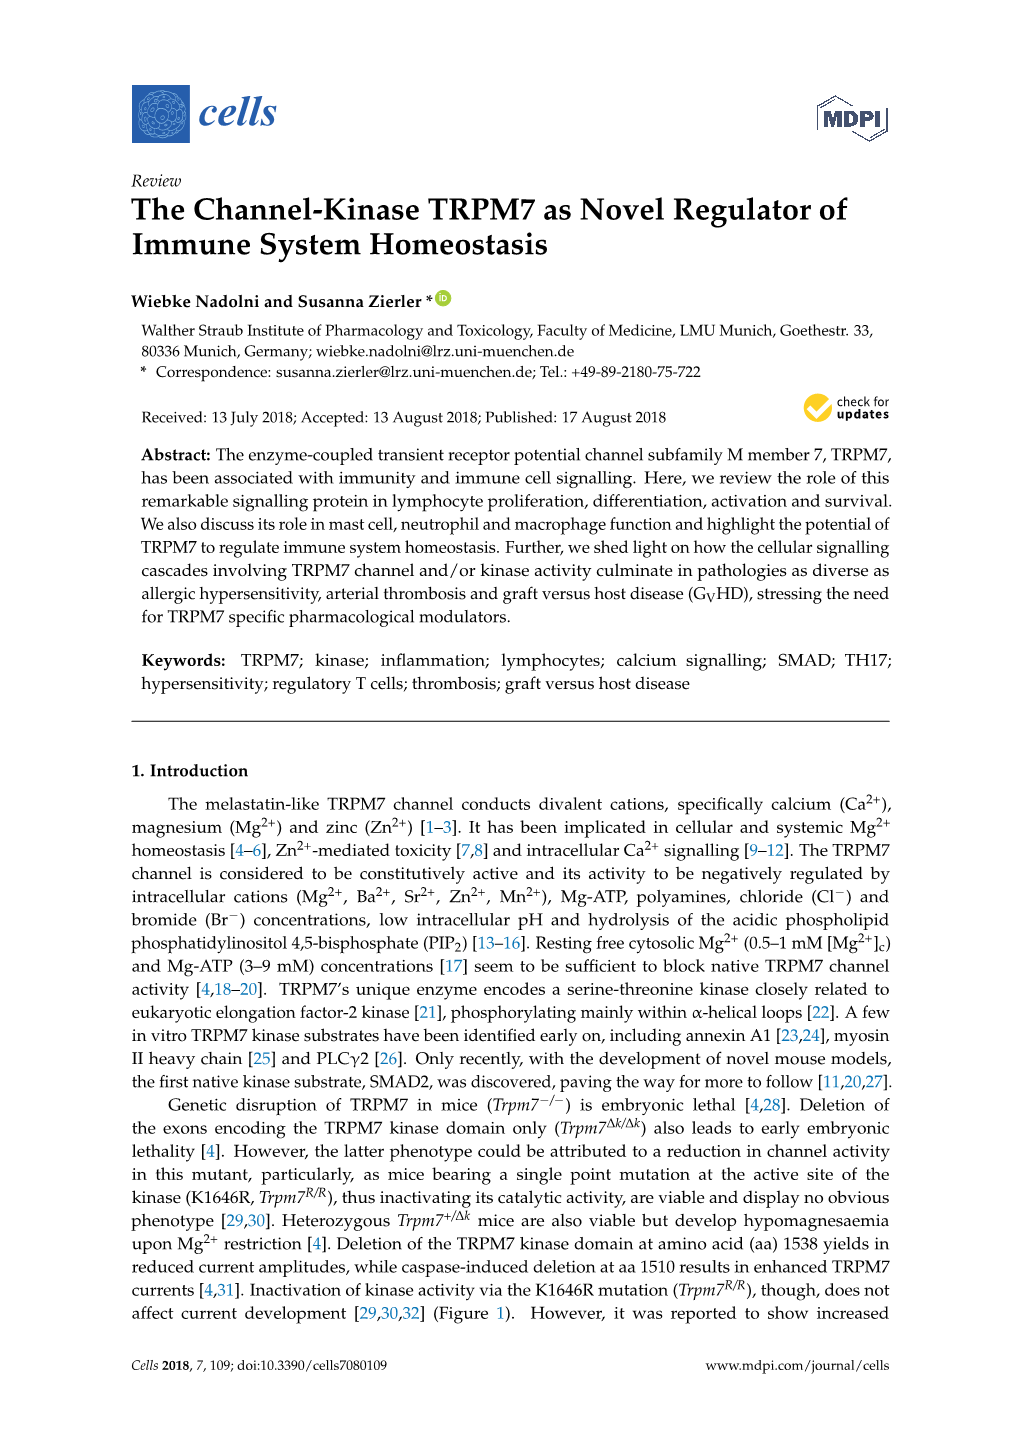 The Channel-Kinase TRPM7 As Novel Regulator of Immune System Homeostasis